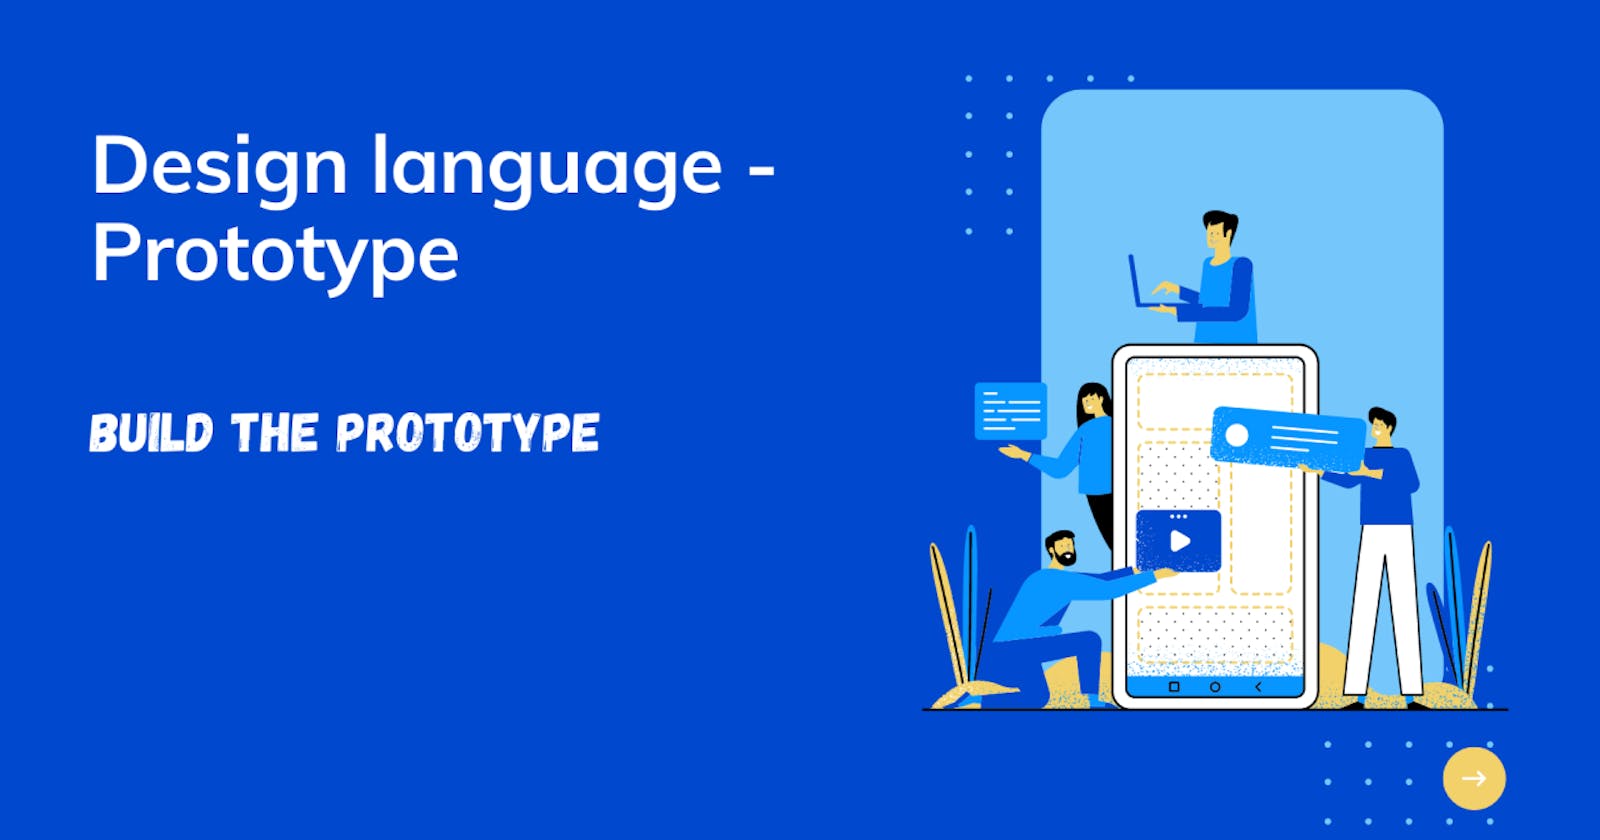 Designer language - prototype